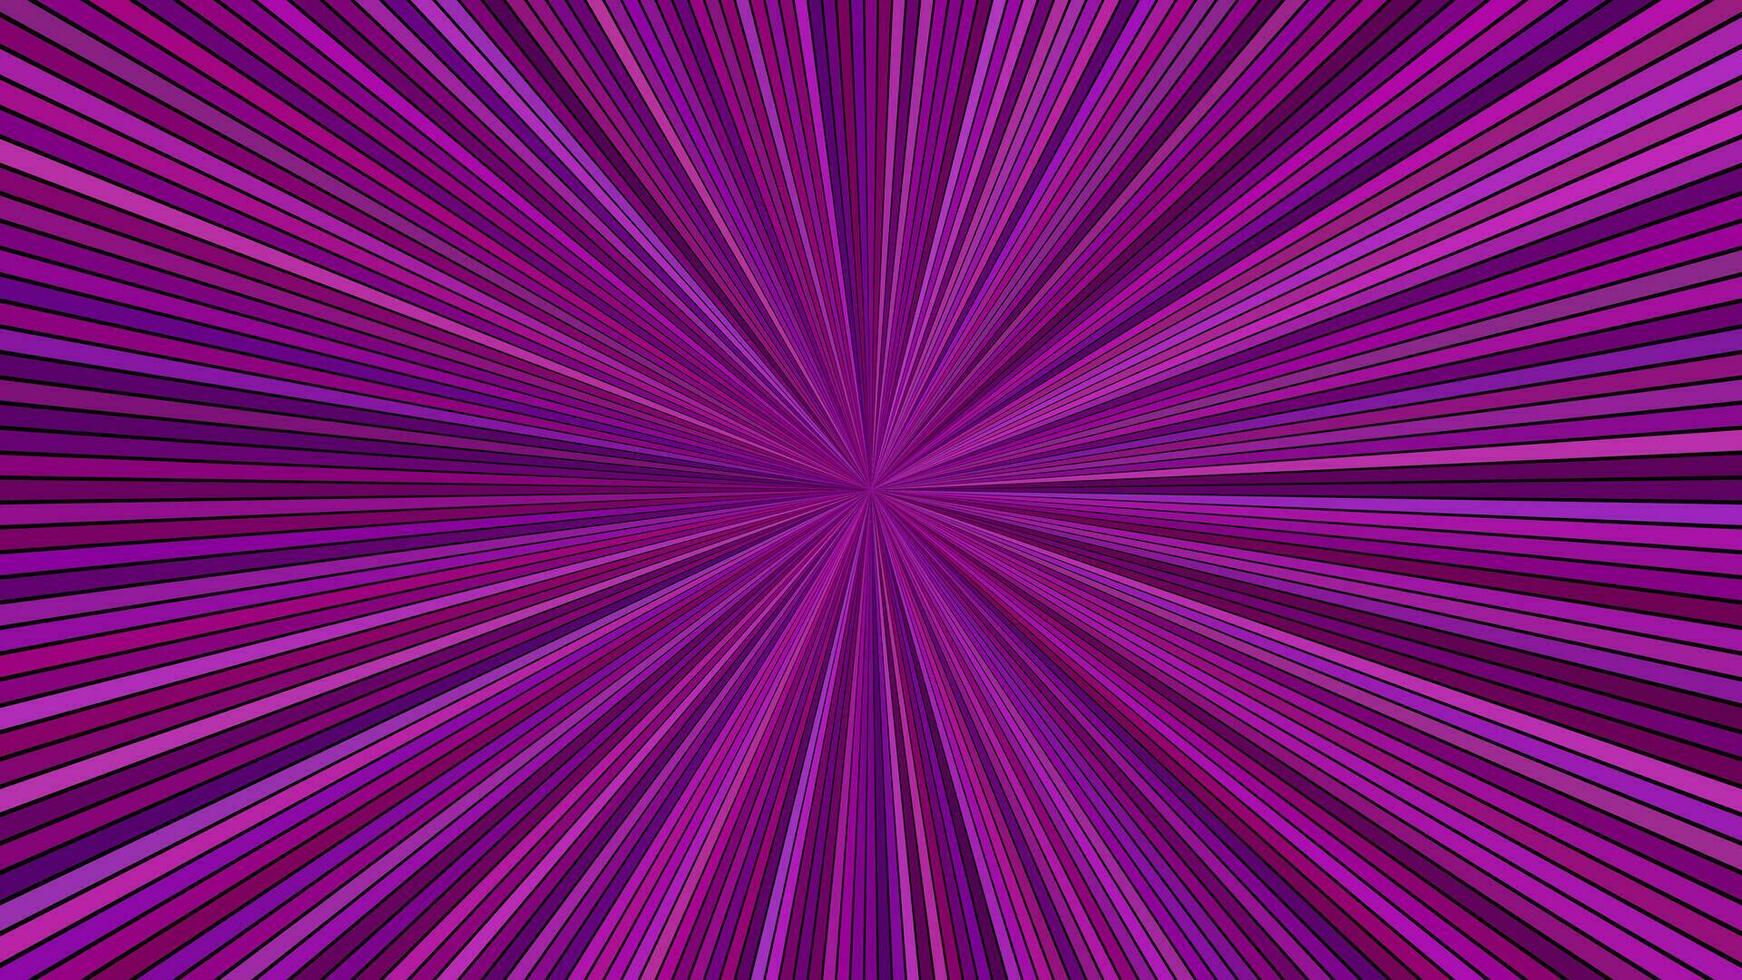 Purple abstract hypnotic star burst stripe background - vector explosion illustration